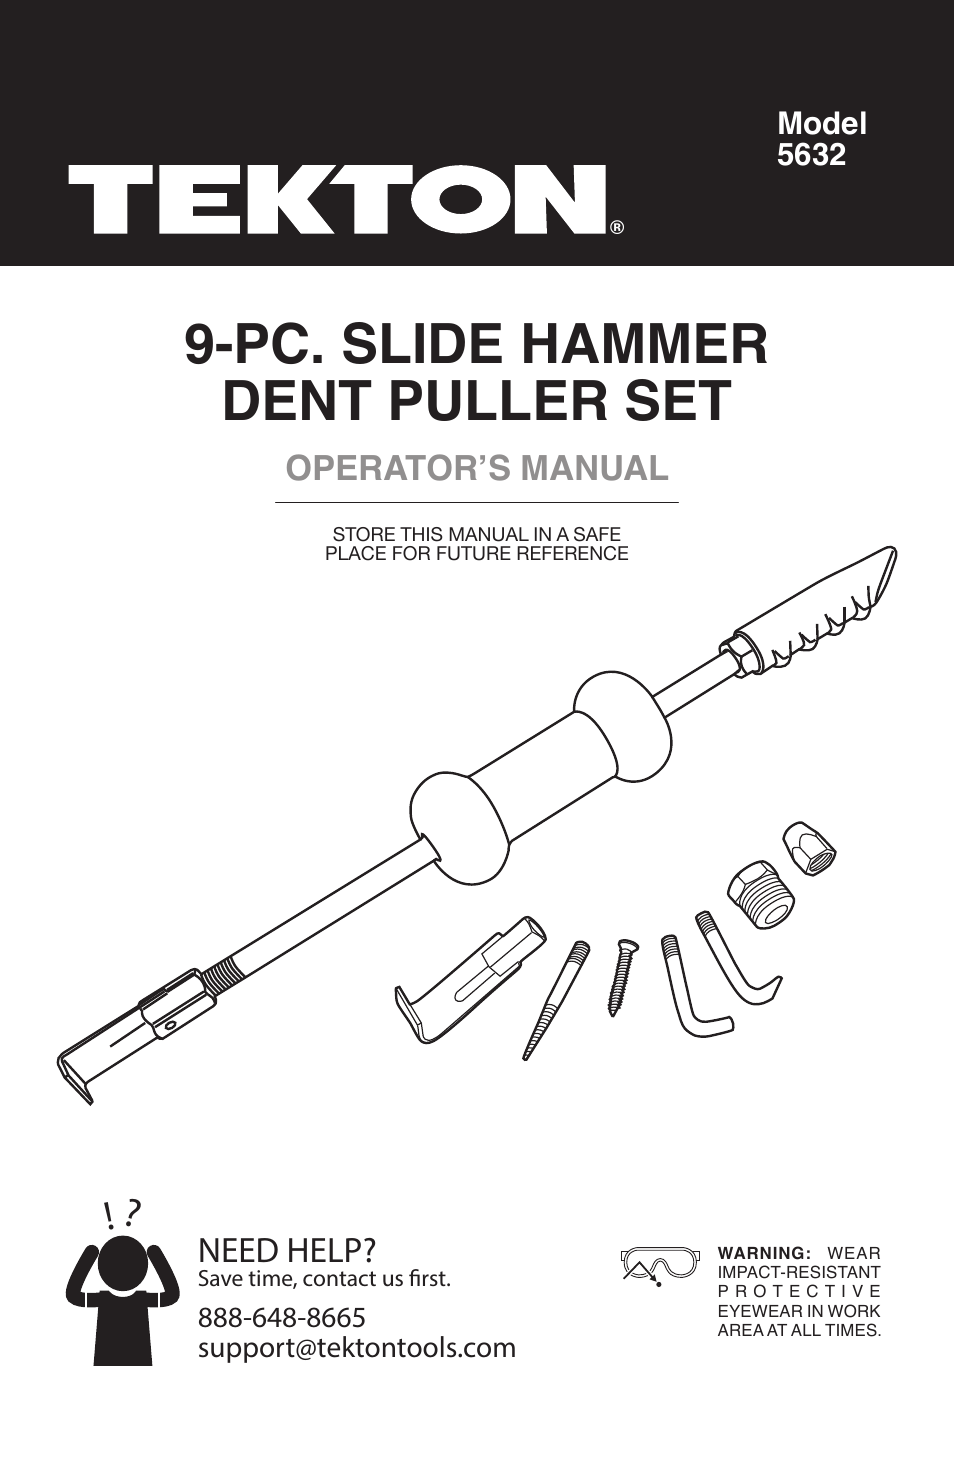 5632 - 9-pc. 5 lb. Slide Hammer Dent Puller Set